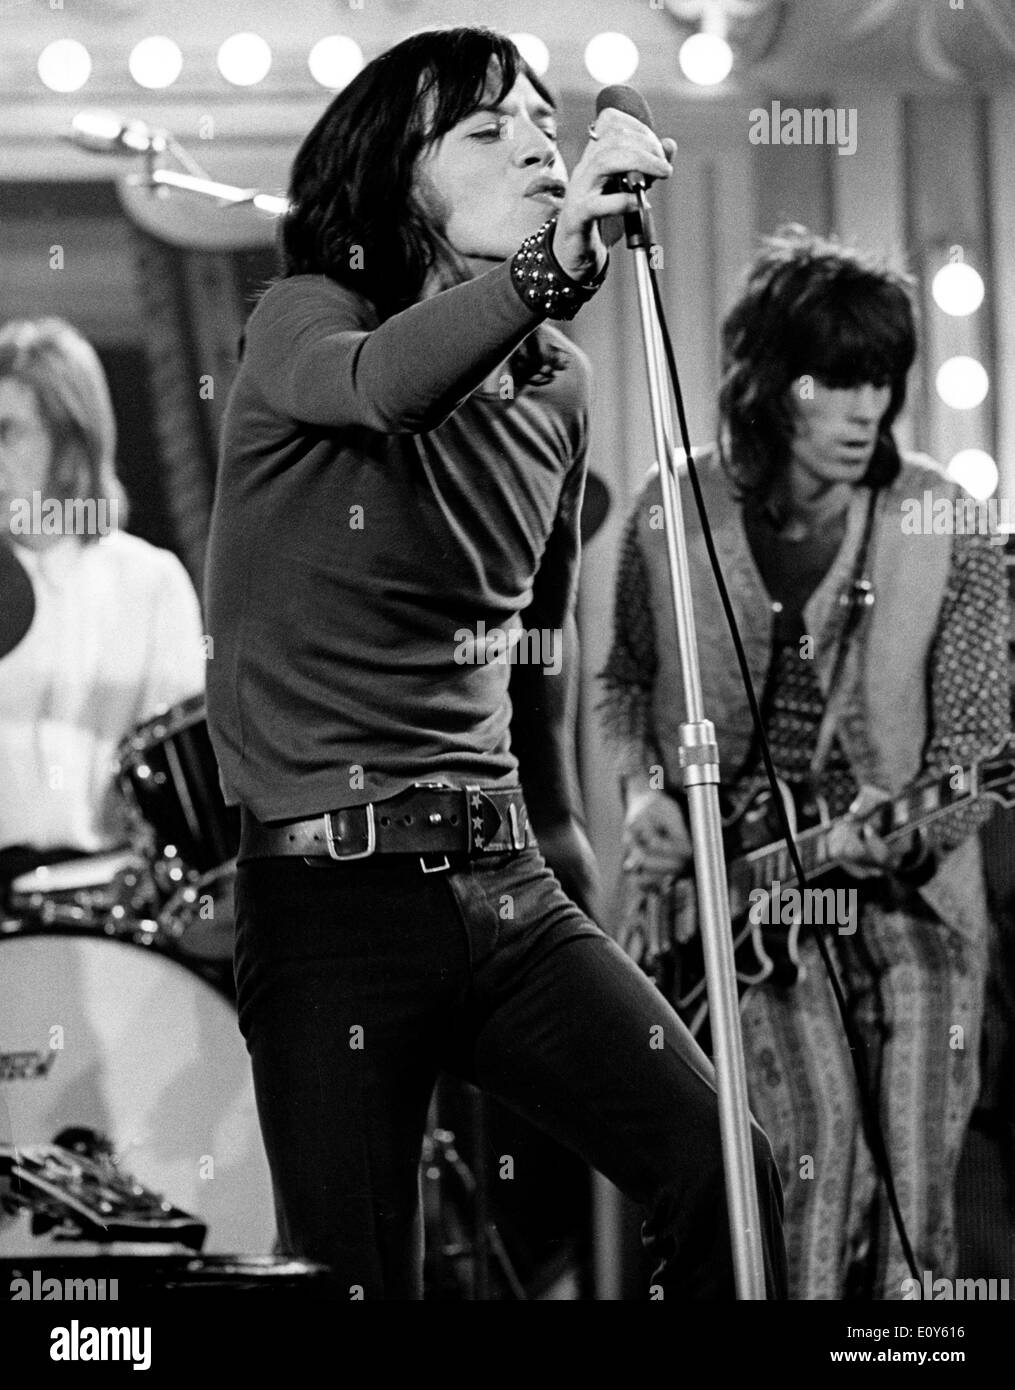 Singer Mick Jagger filming 'Rock 'n' Roll Circus' Stock Photo